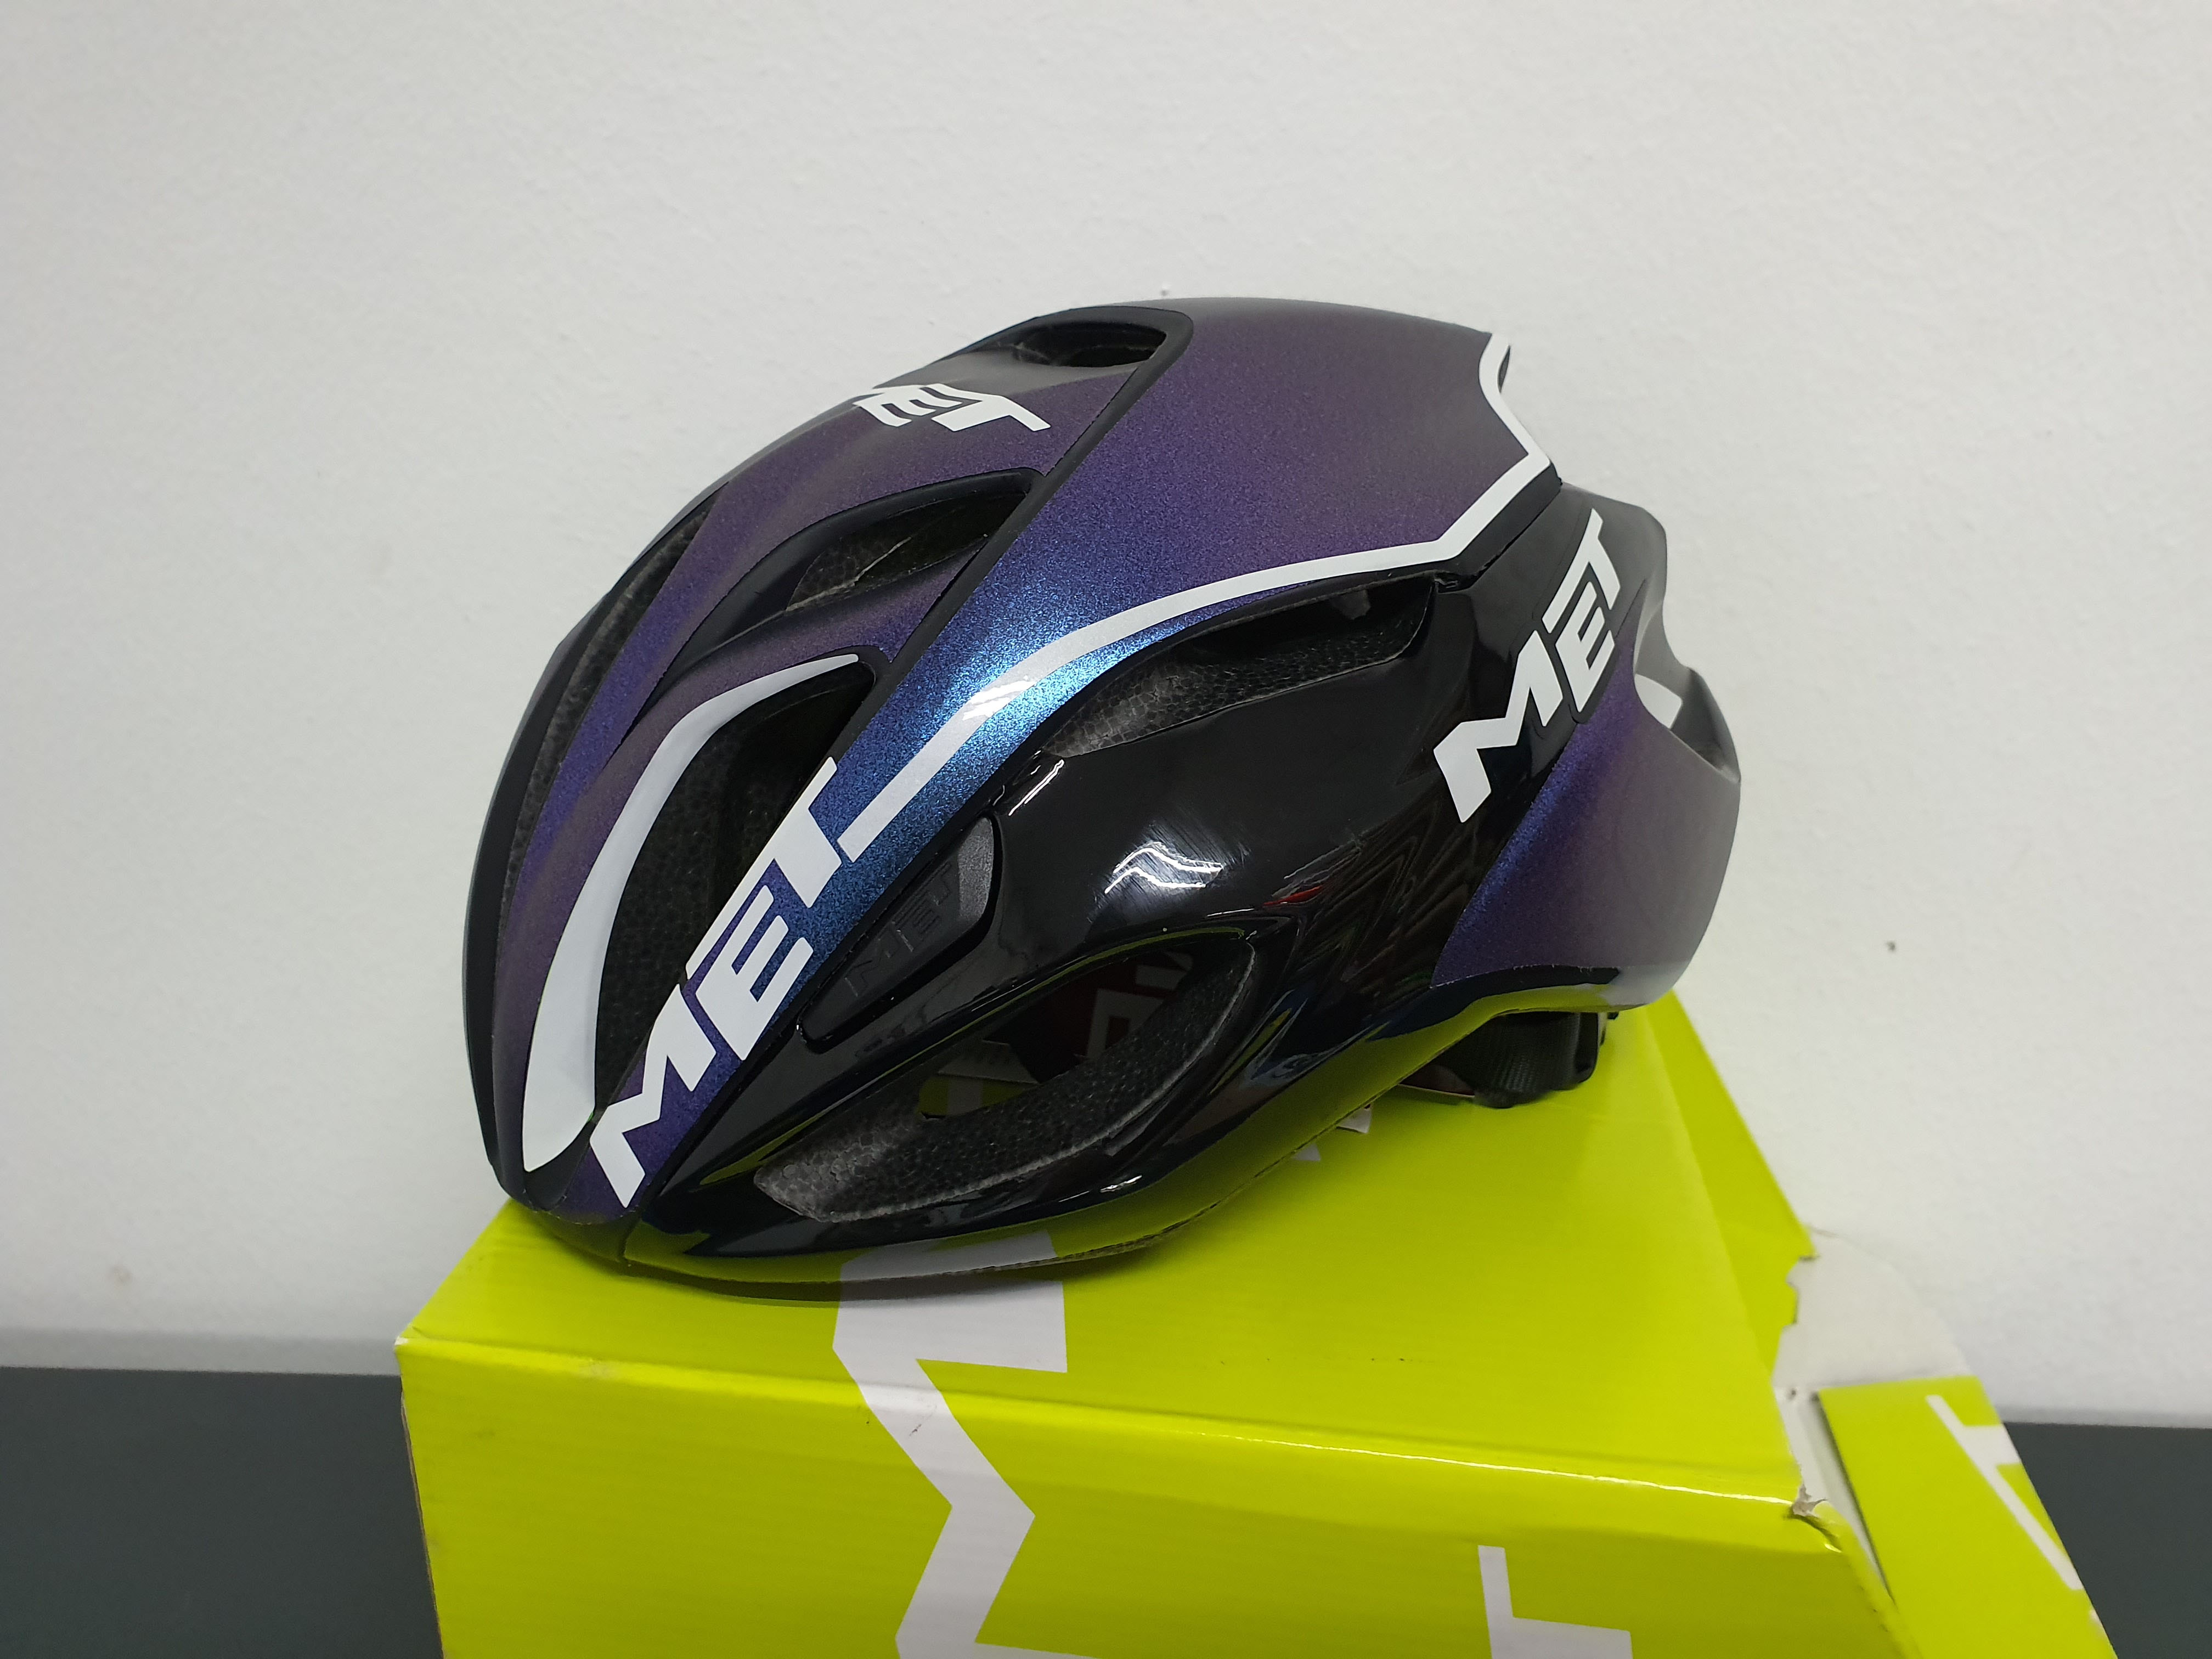 Custom Decal for MET Helmets in Metallic Purple and White